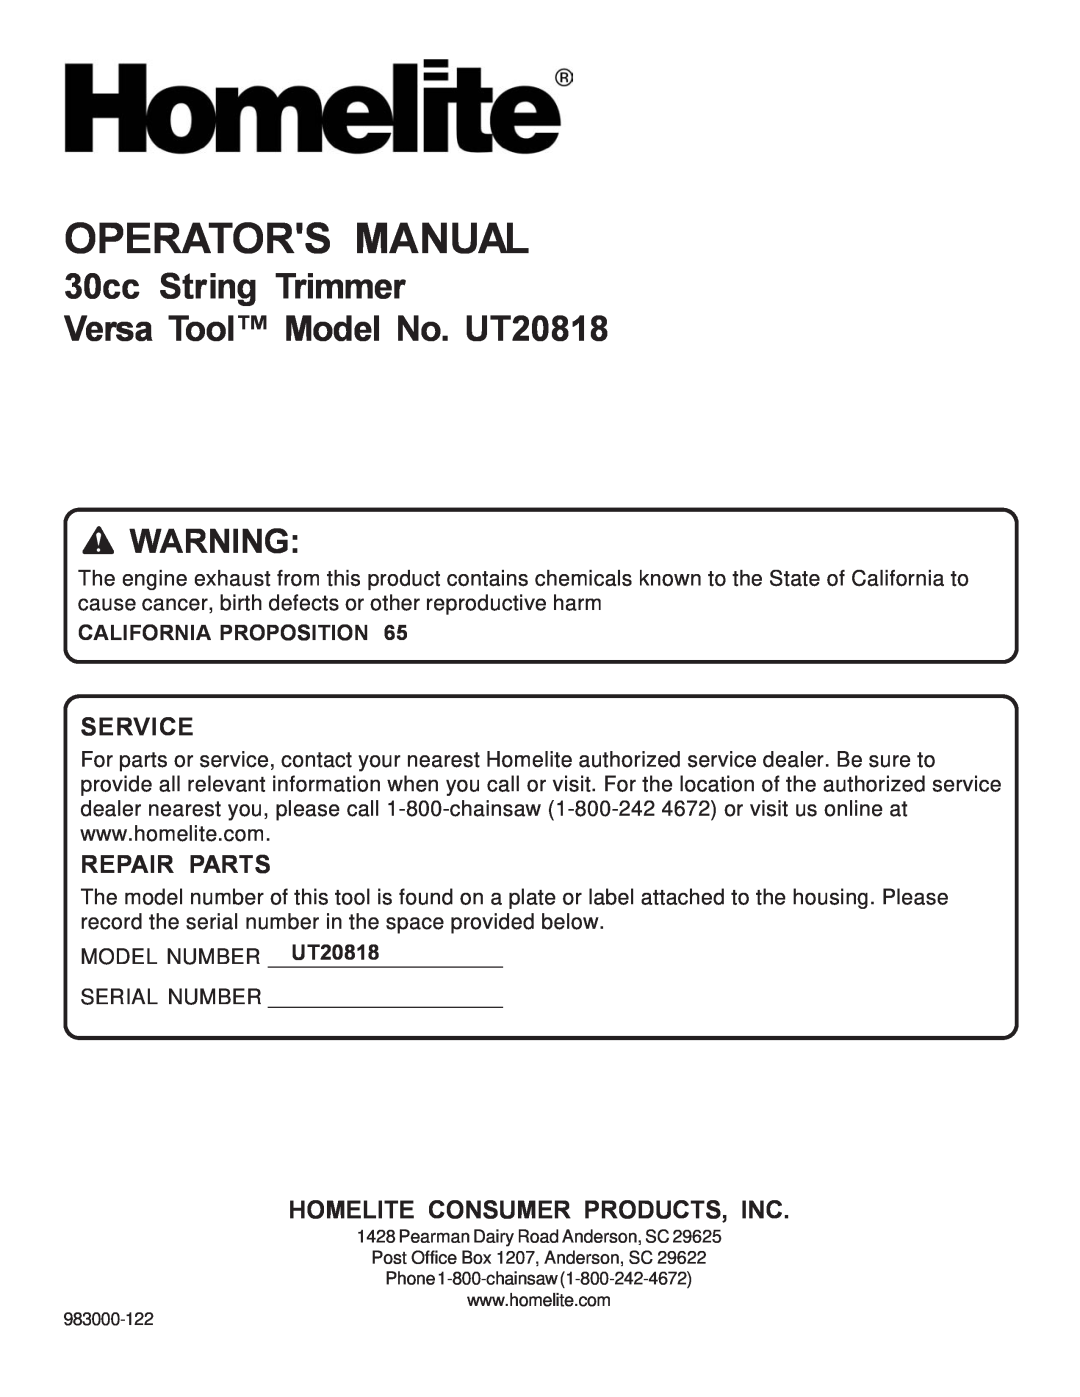 Homelite UT20818 manual Service, Repair Parts, Homelite Consumer Products, Inc, California Proposition, Operators Manual 